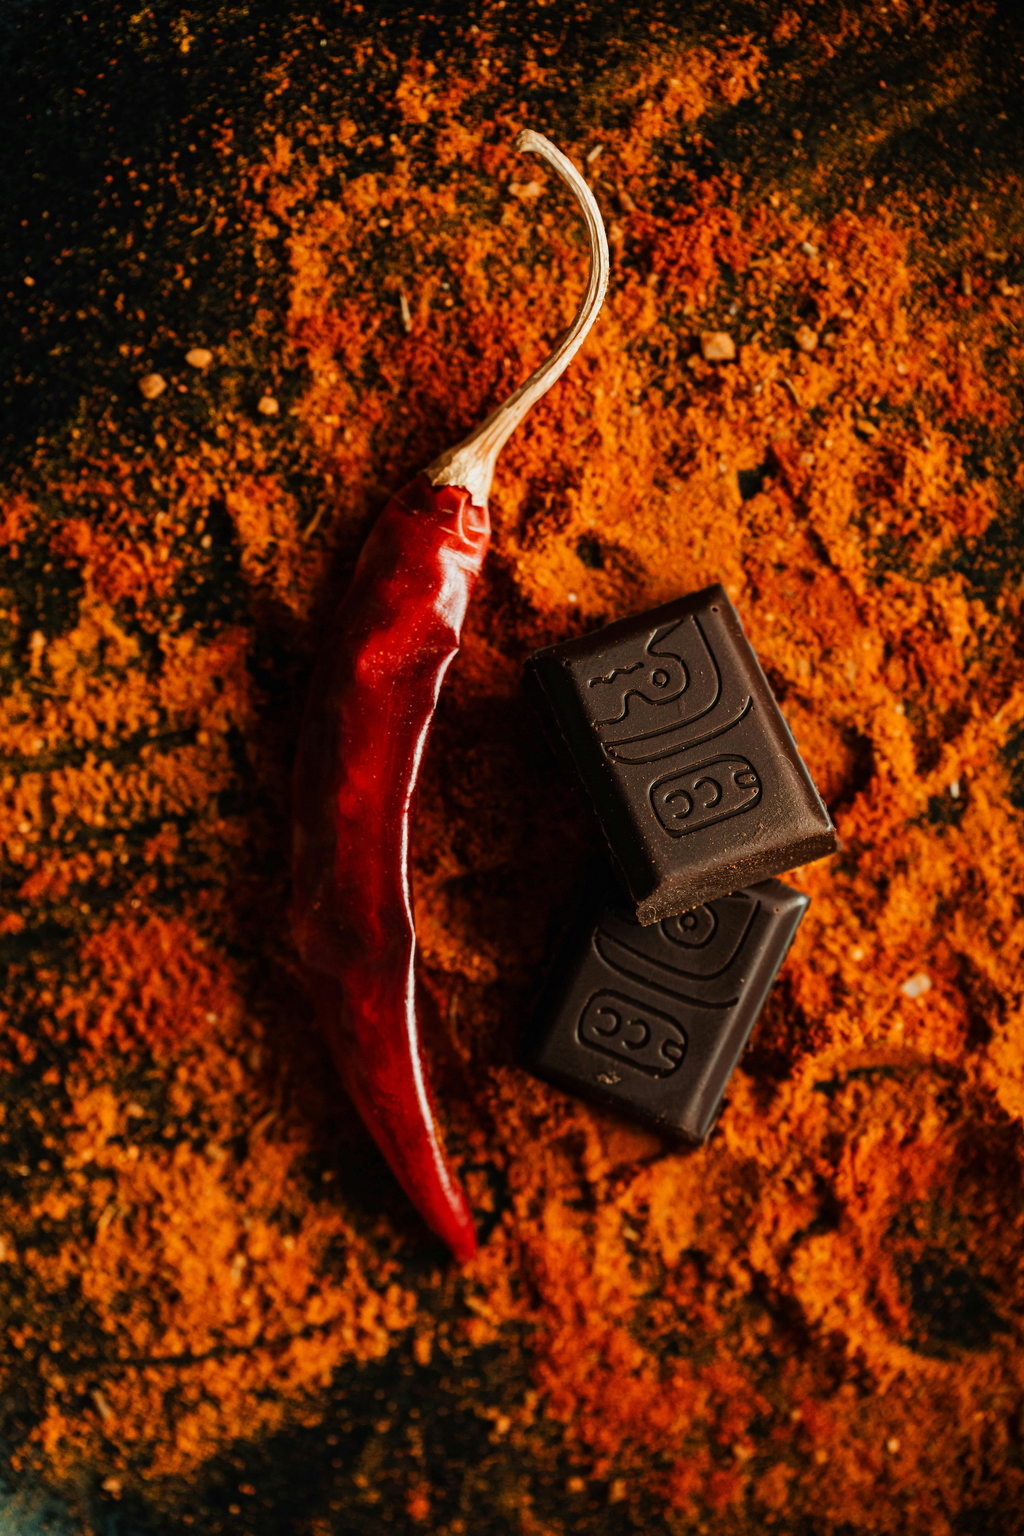 Red Pepper with Chocolate – Pexel photo by Karolina Grabowska